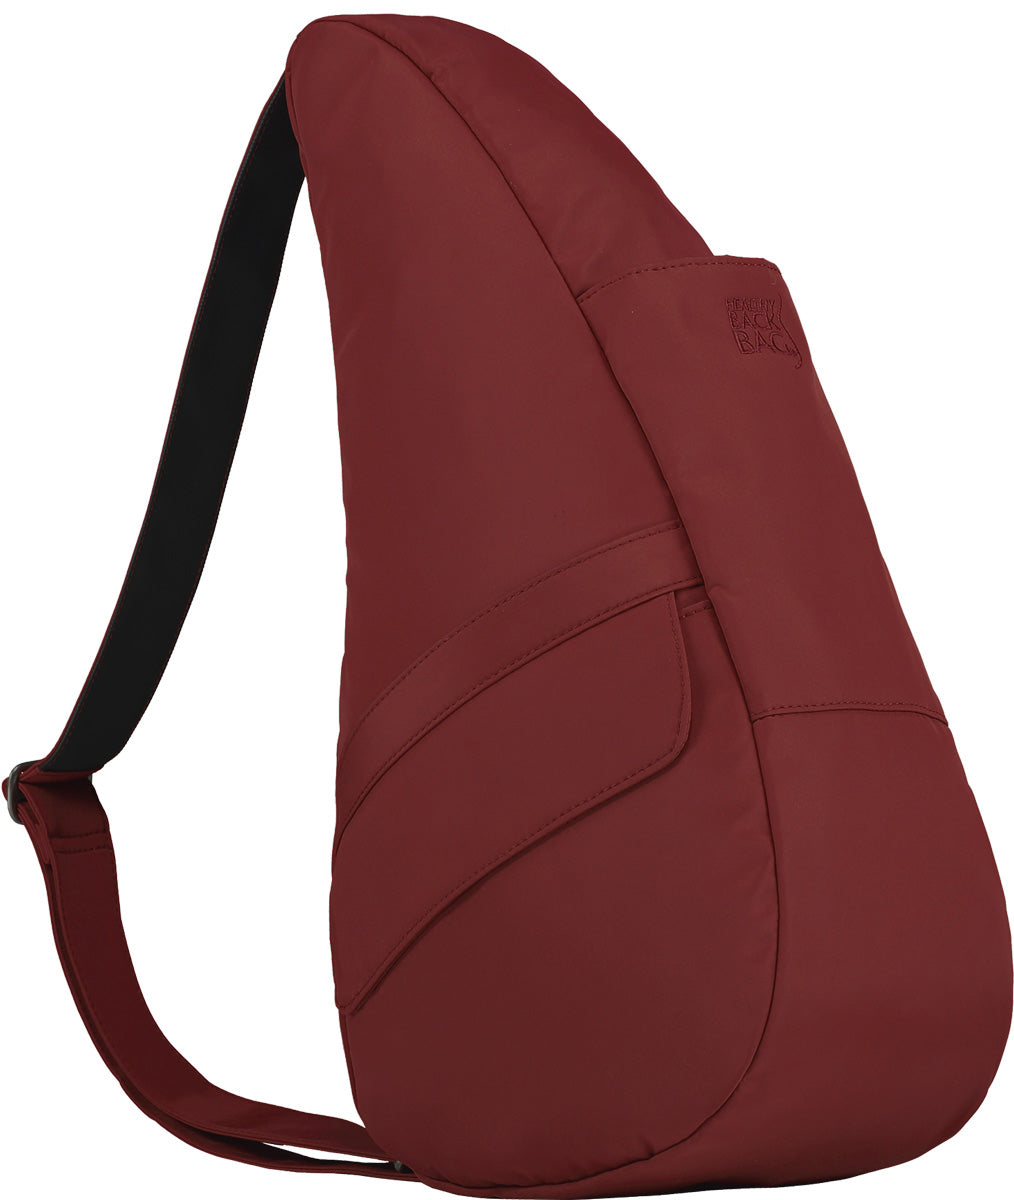 AmeriBag Healthy Back Bag tote Microfiber Small (Cayenne)